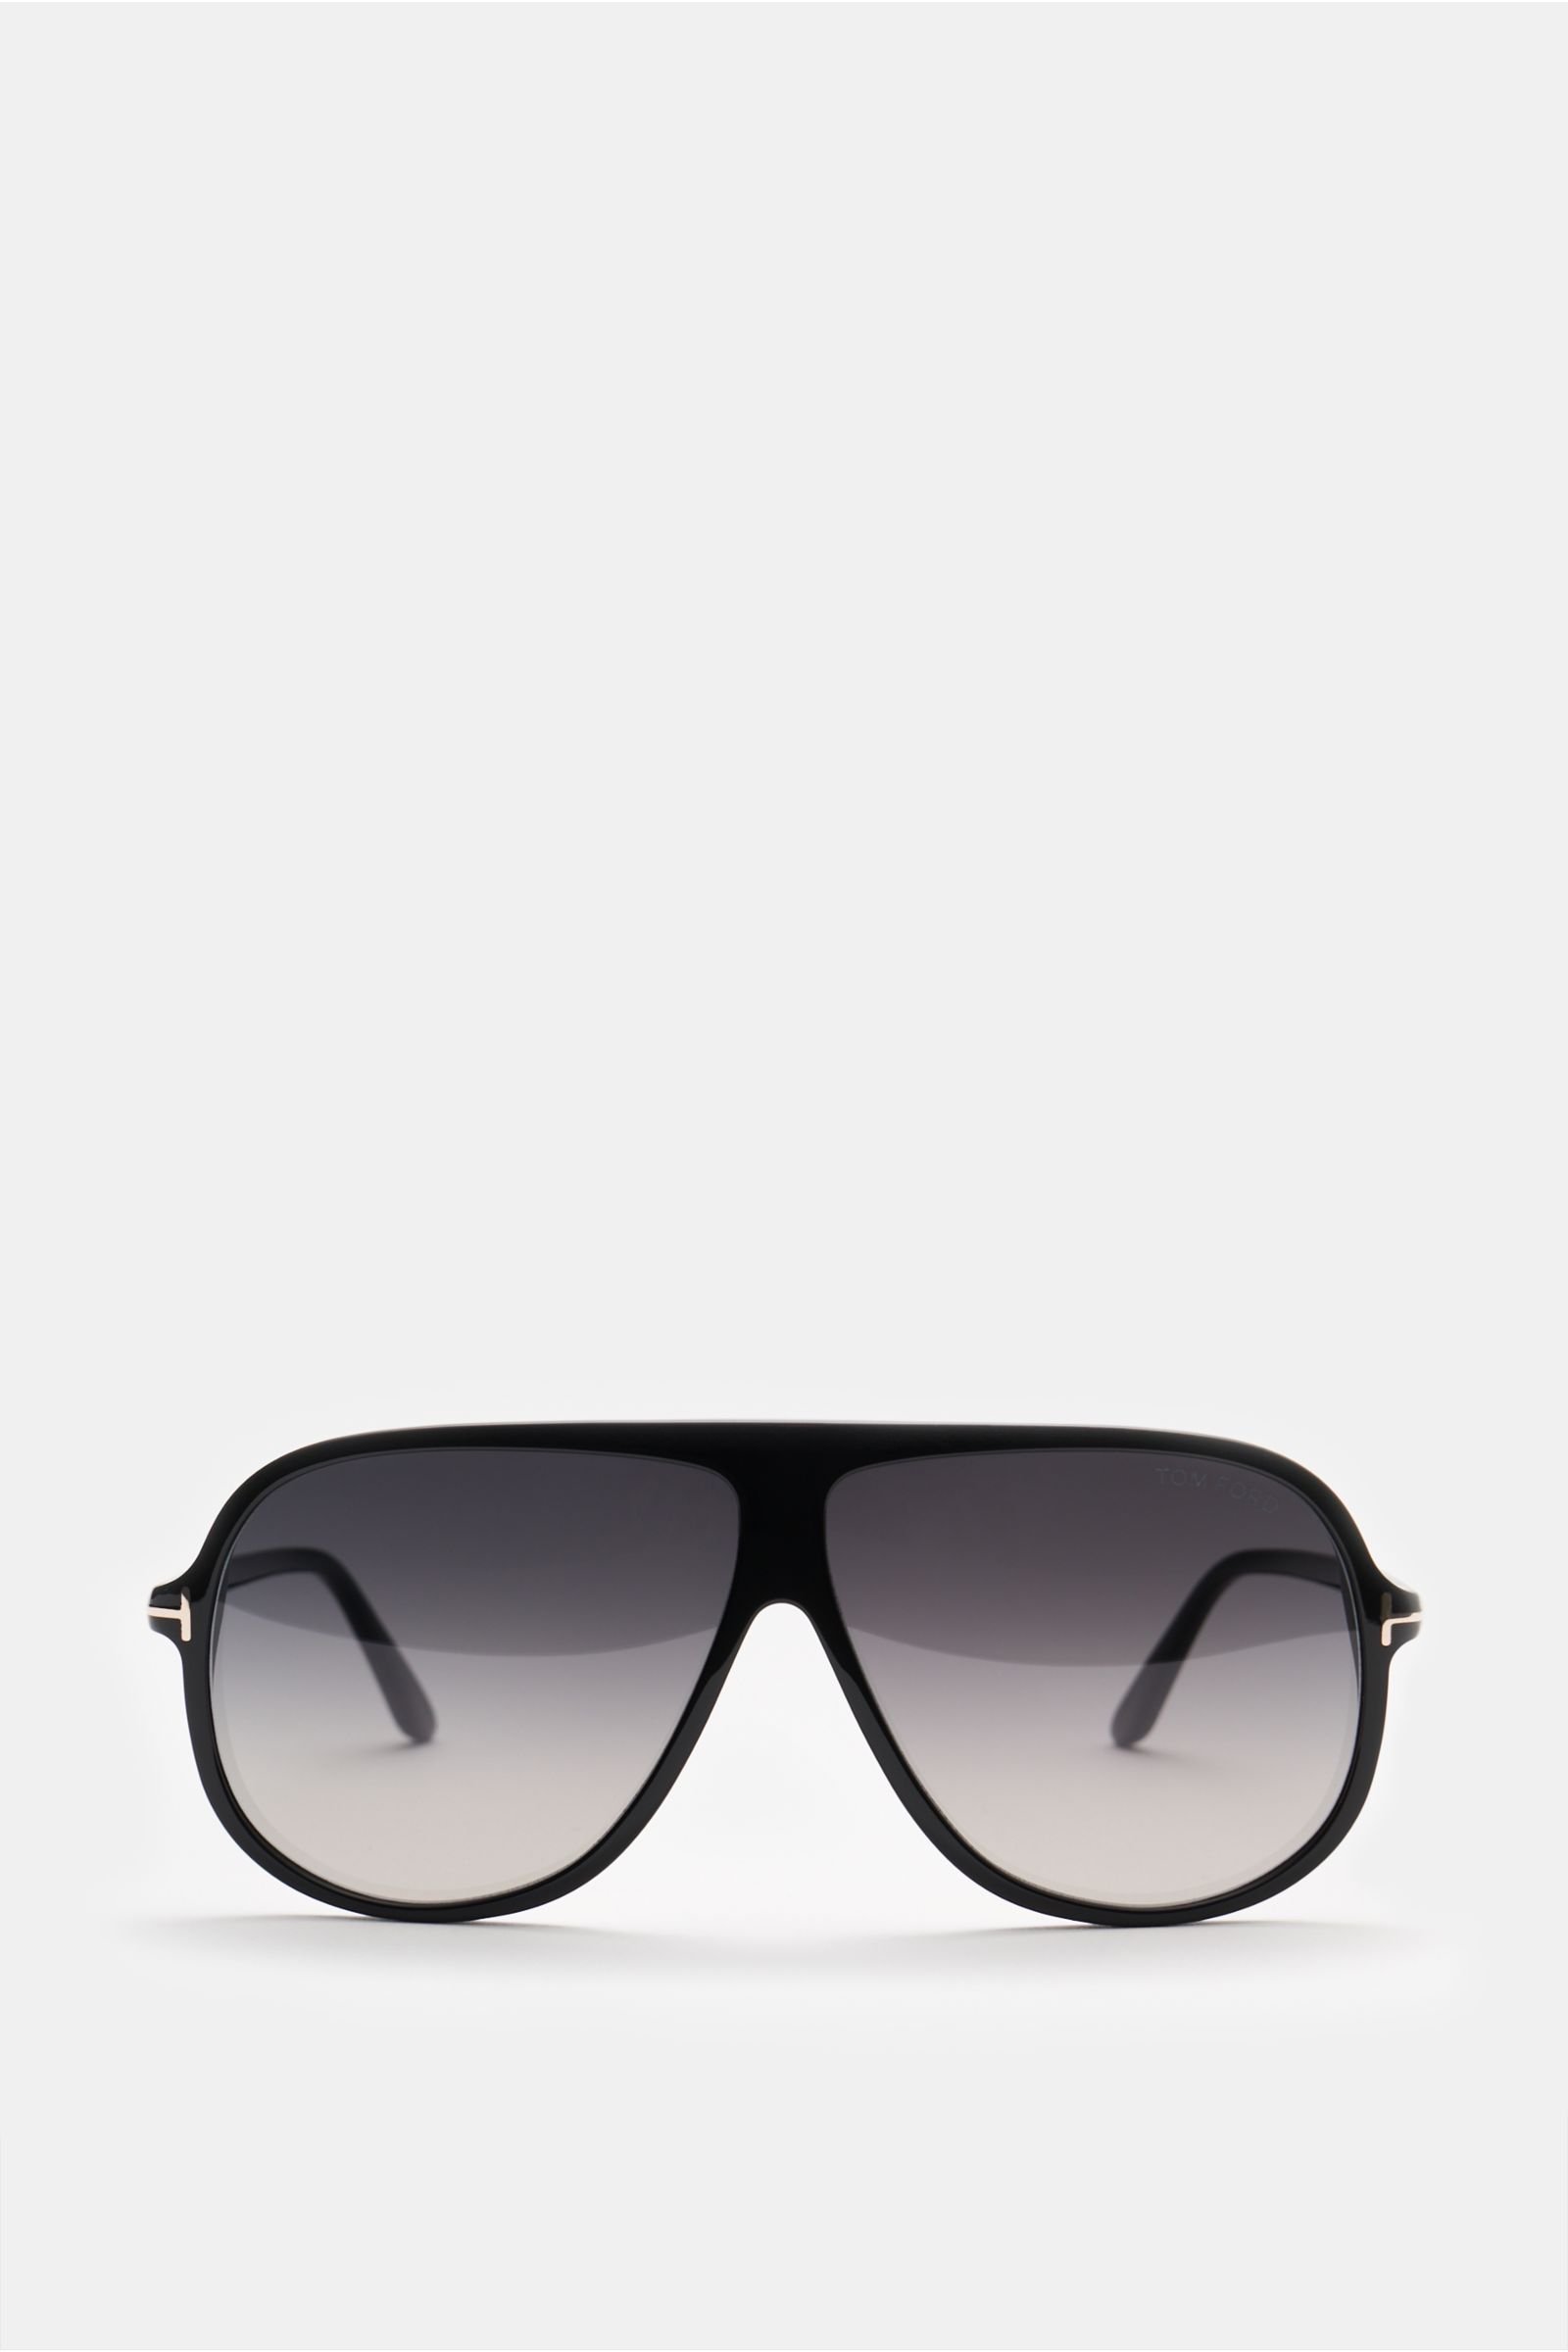 Descubrir 67+ imagen who manufactures tom ford sunglasses